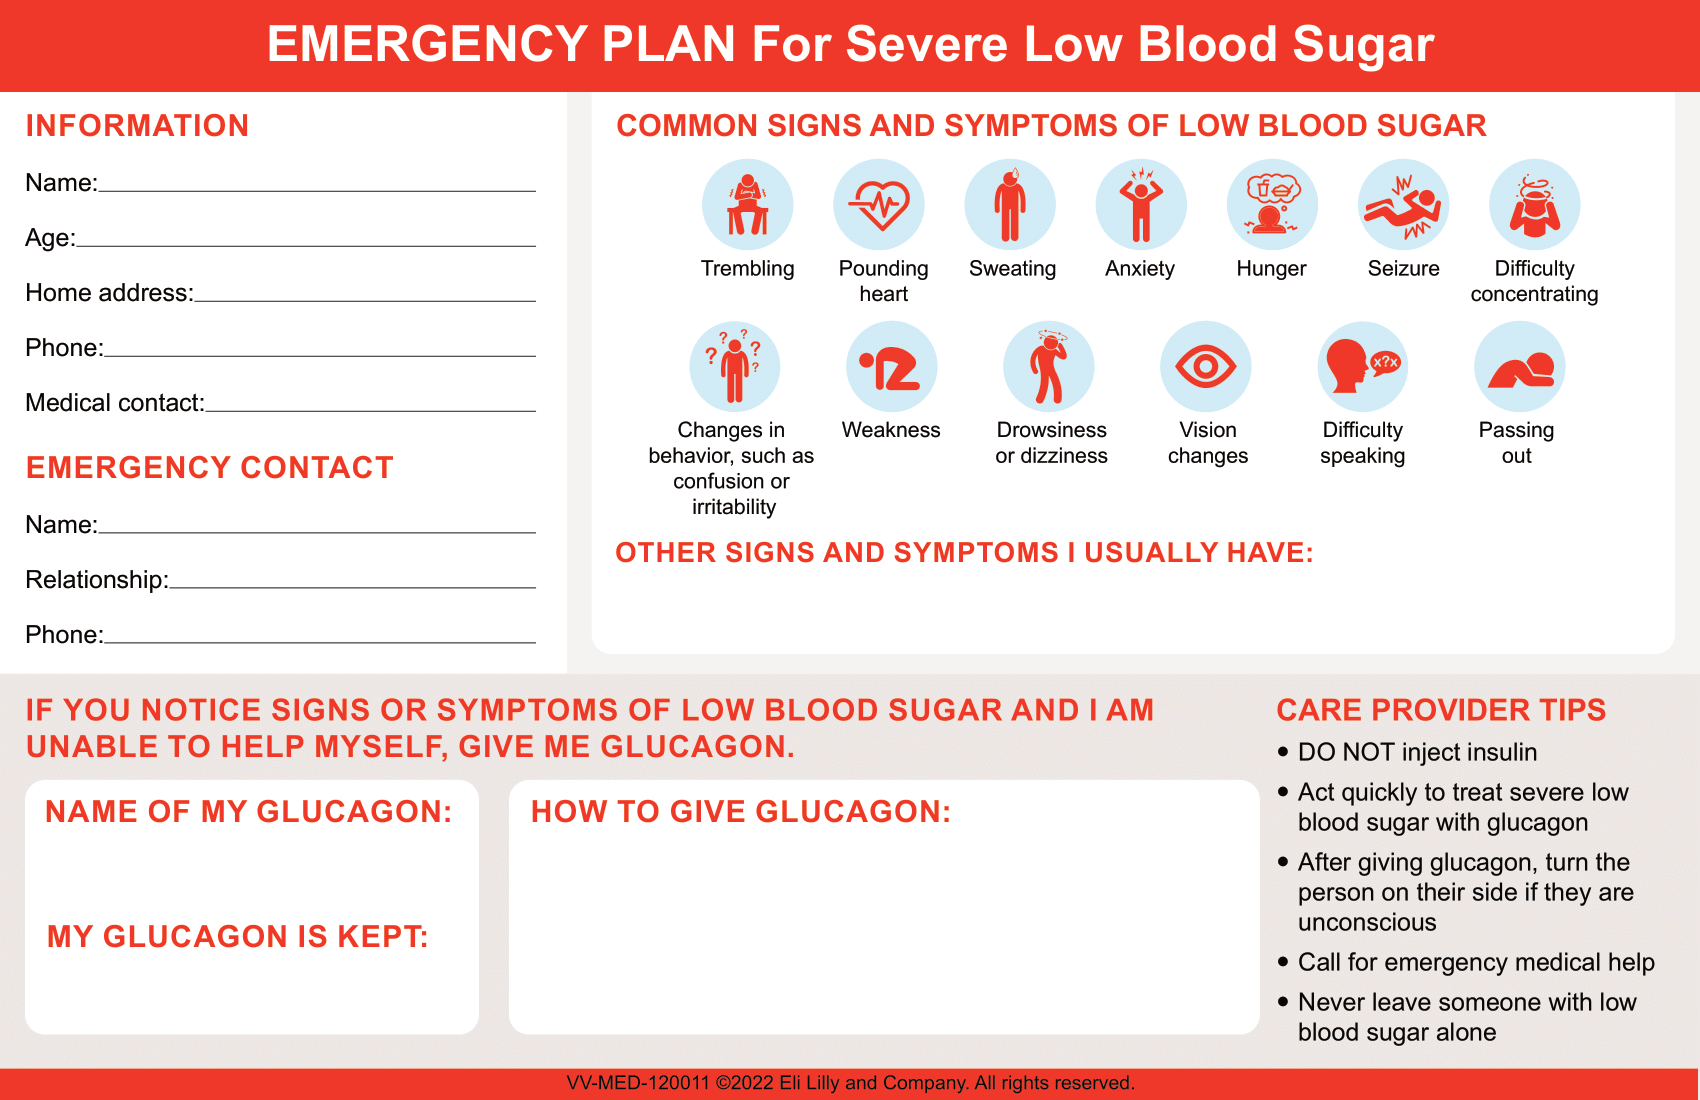 Emergency Plan for Severe Low Blood Sugar